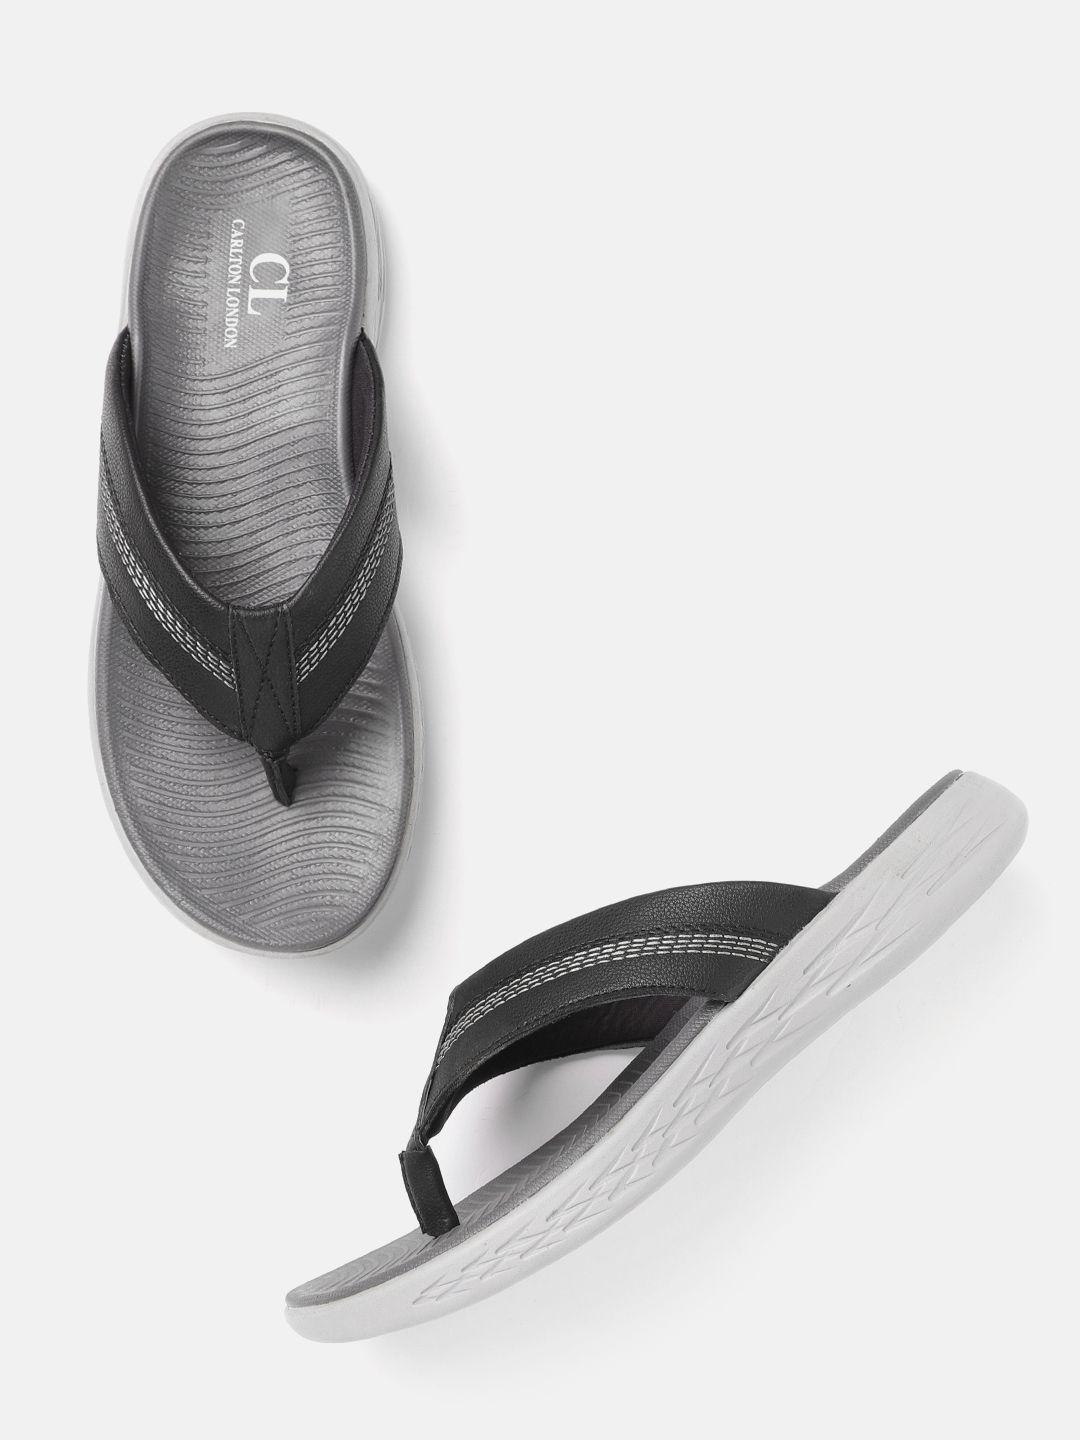 carlton-london-men-black-&-grey-comfort-sandals-with-thread-work